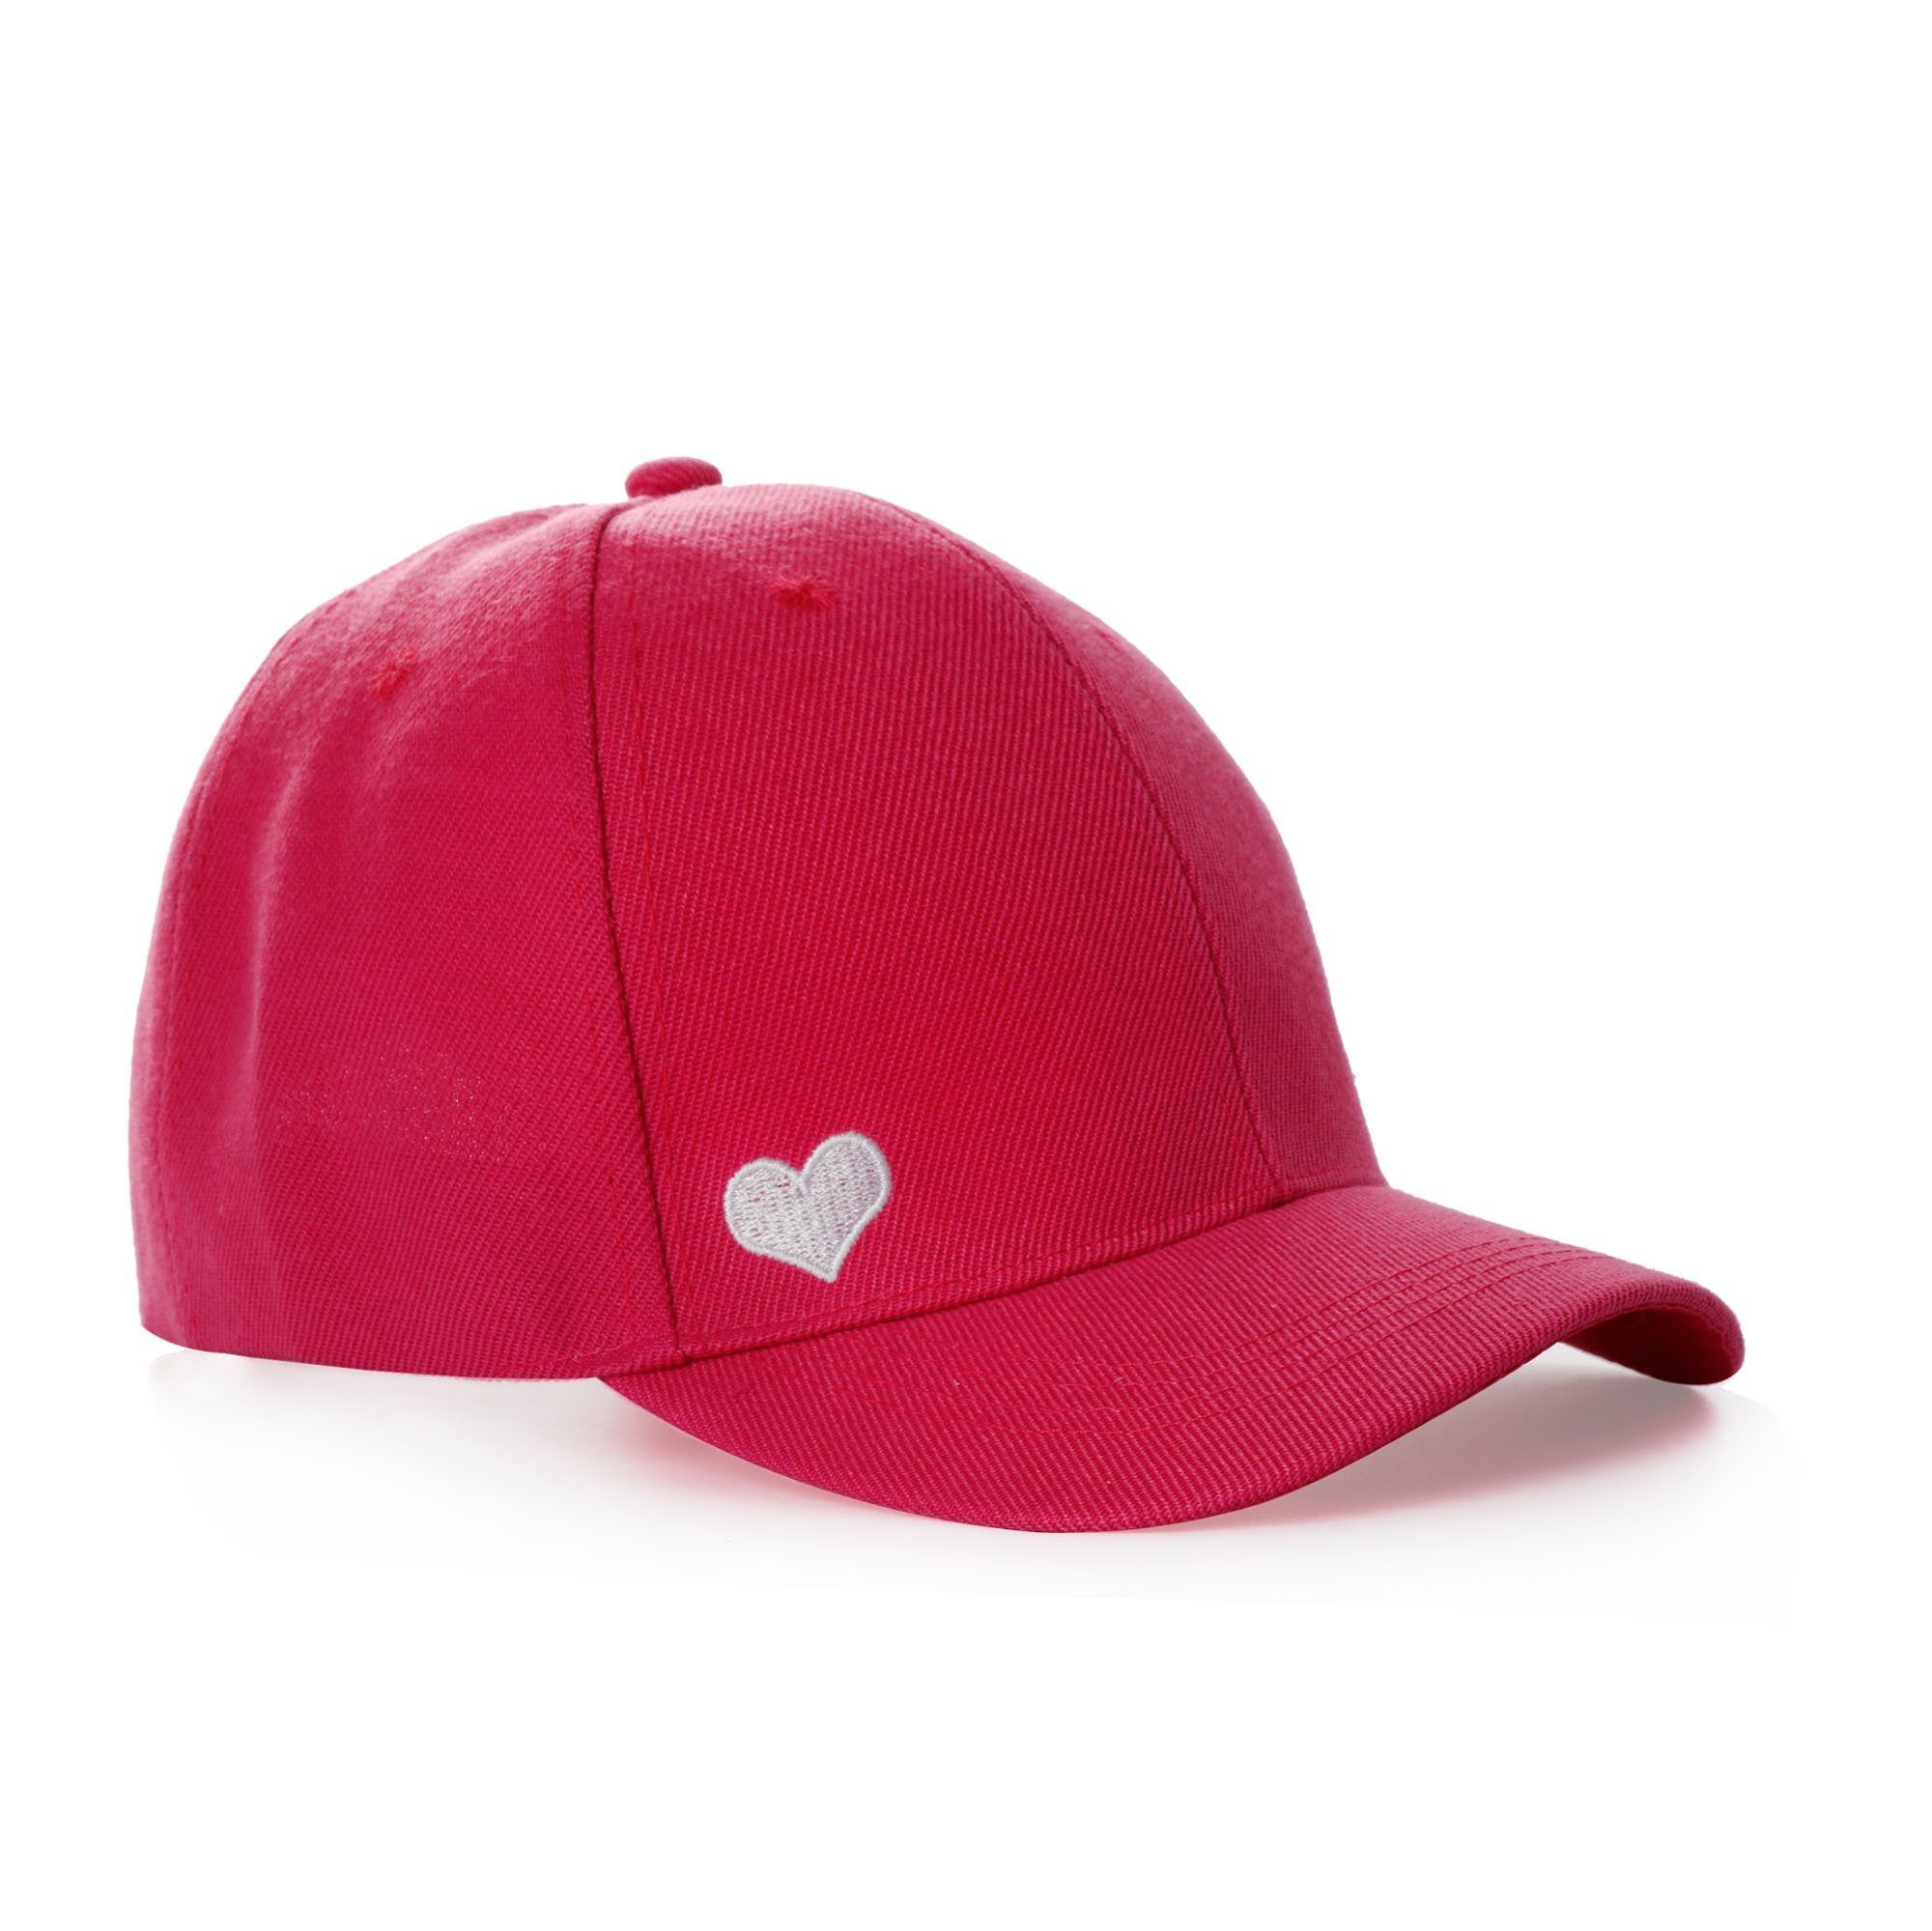 Sonia Originelli Baseball Cap Baseball "Herz" Snapback Cap Unisex Mütze pink